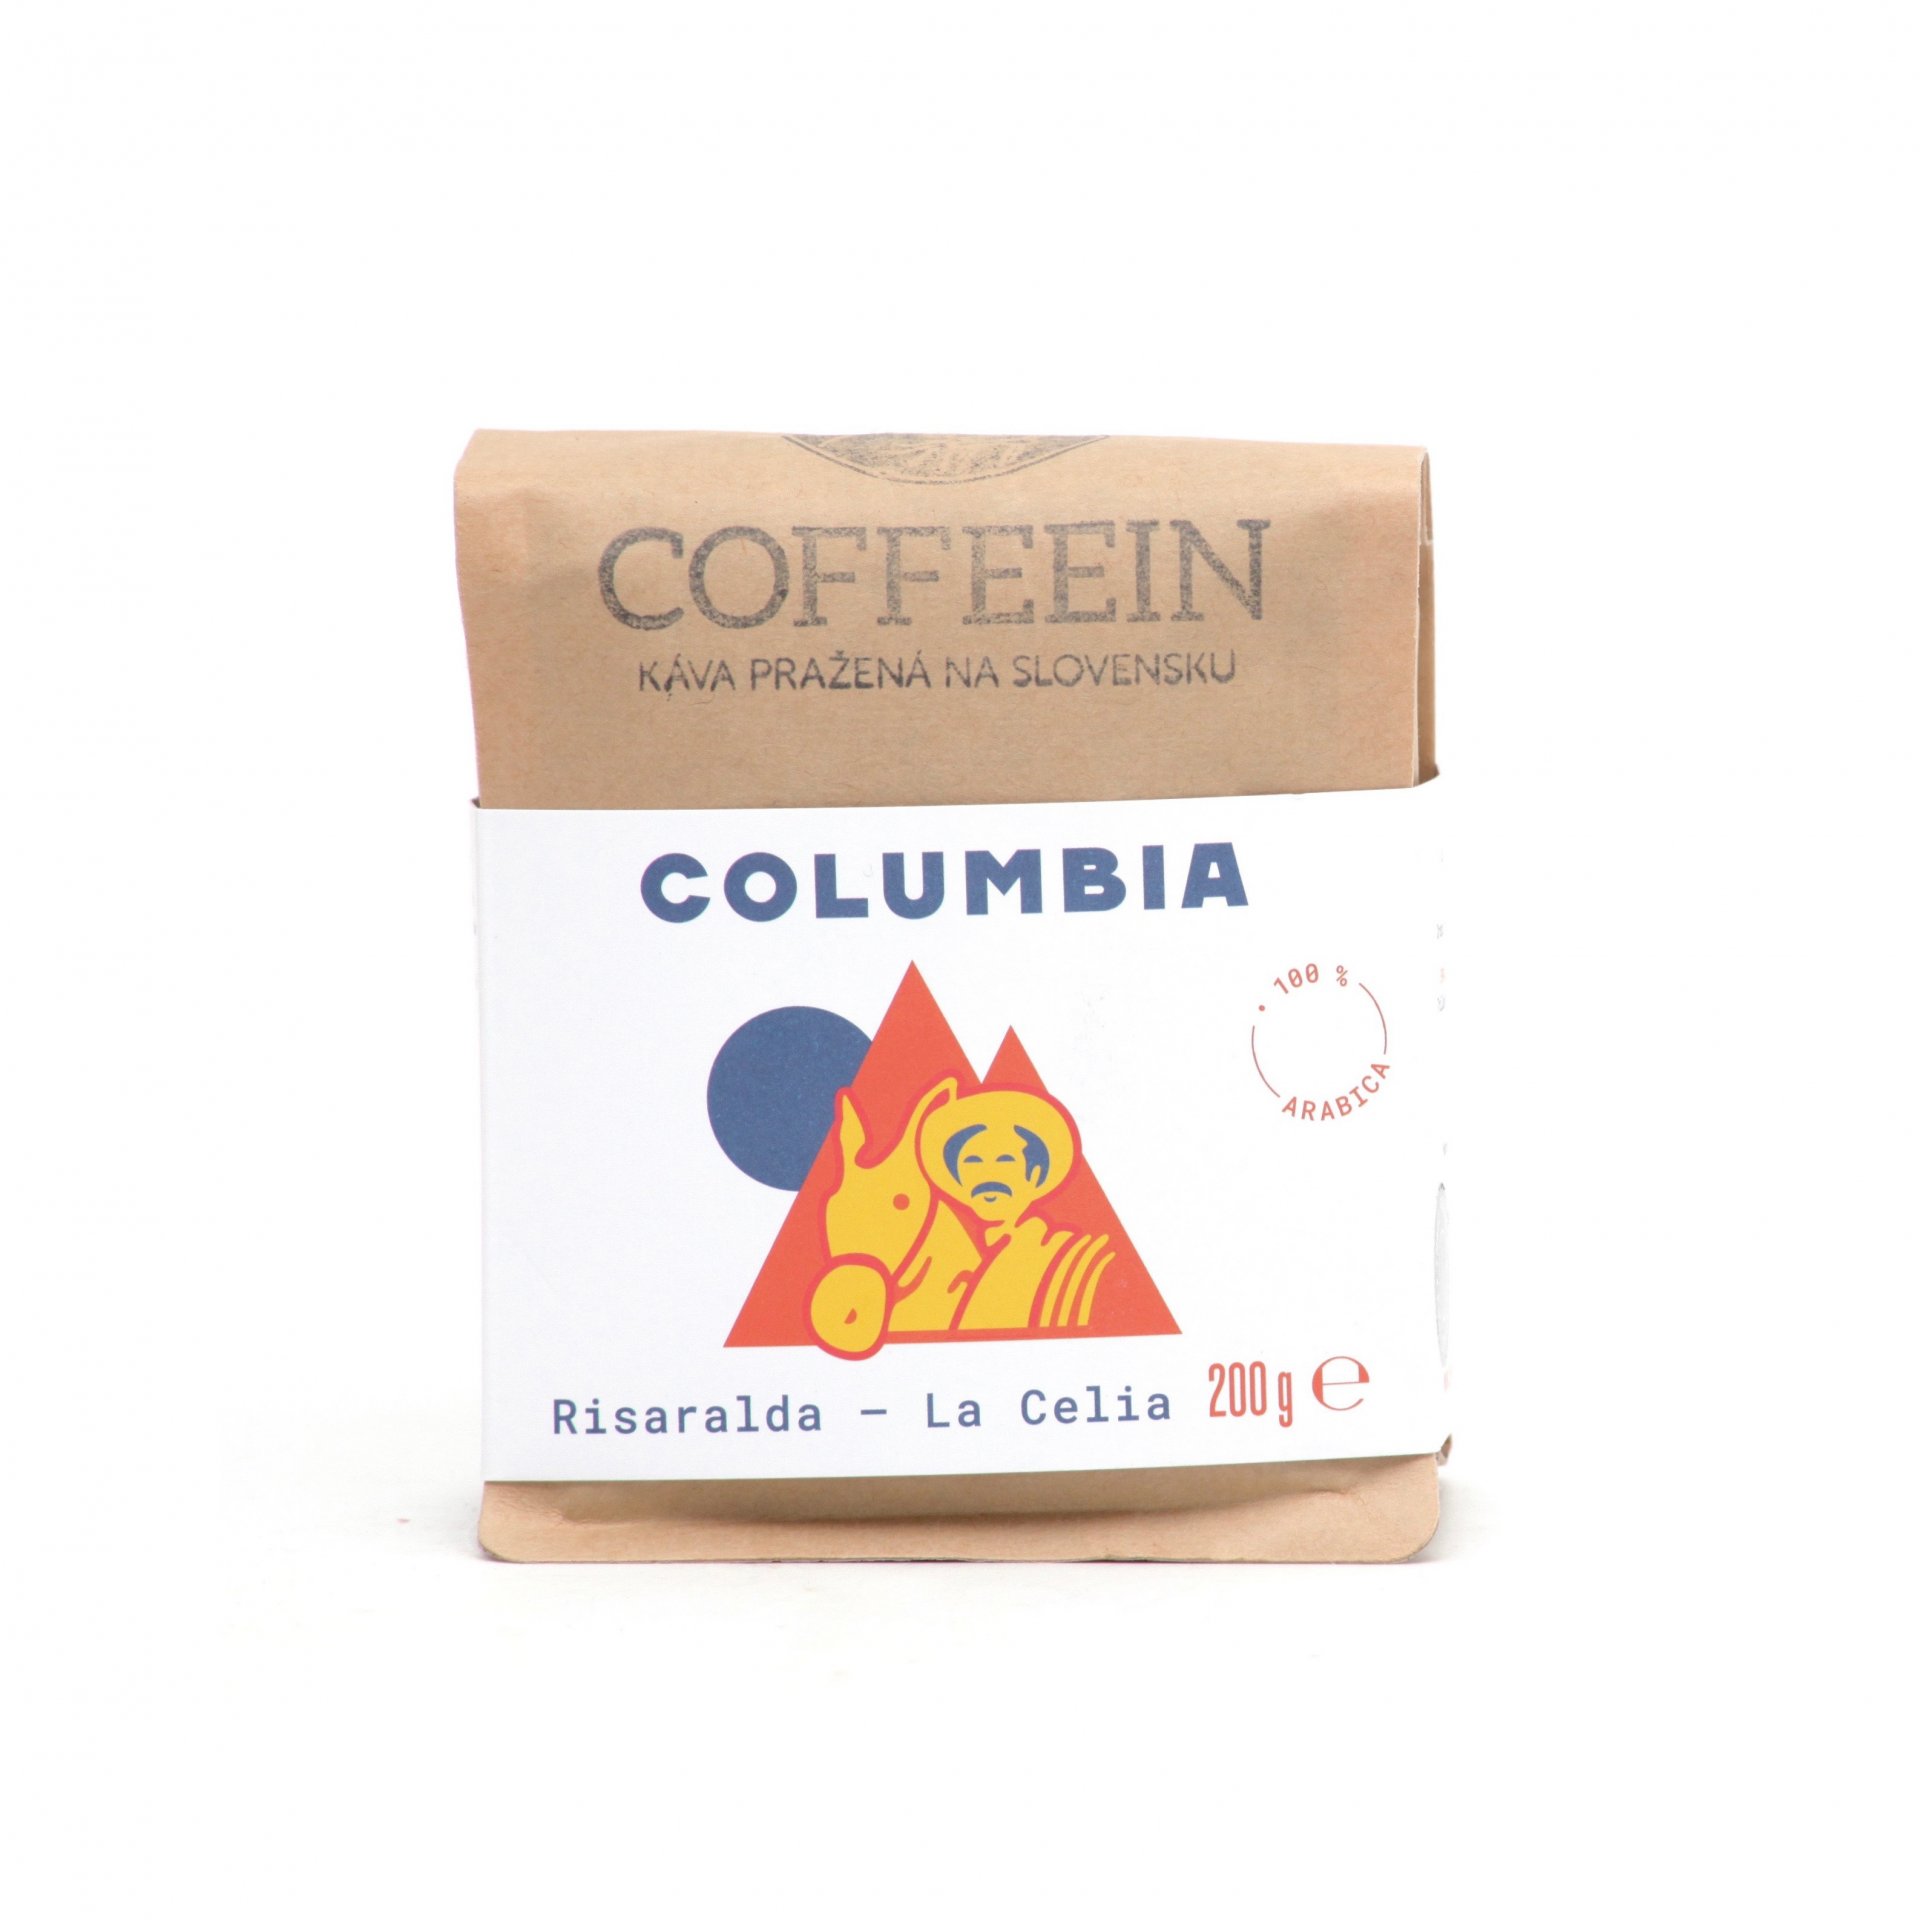 Coffeein Columbia Risaralda La Celia200g